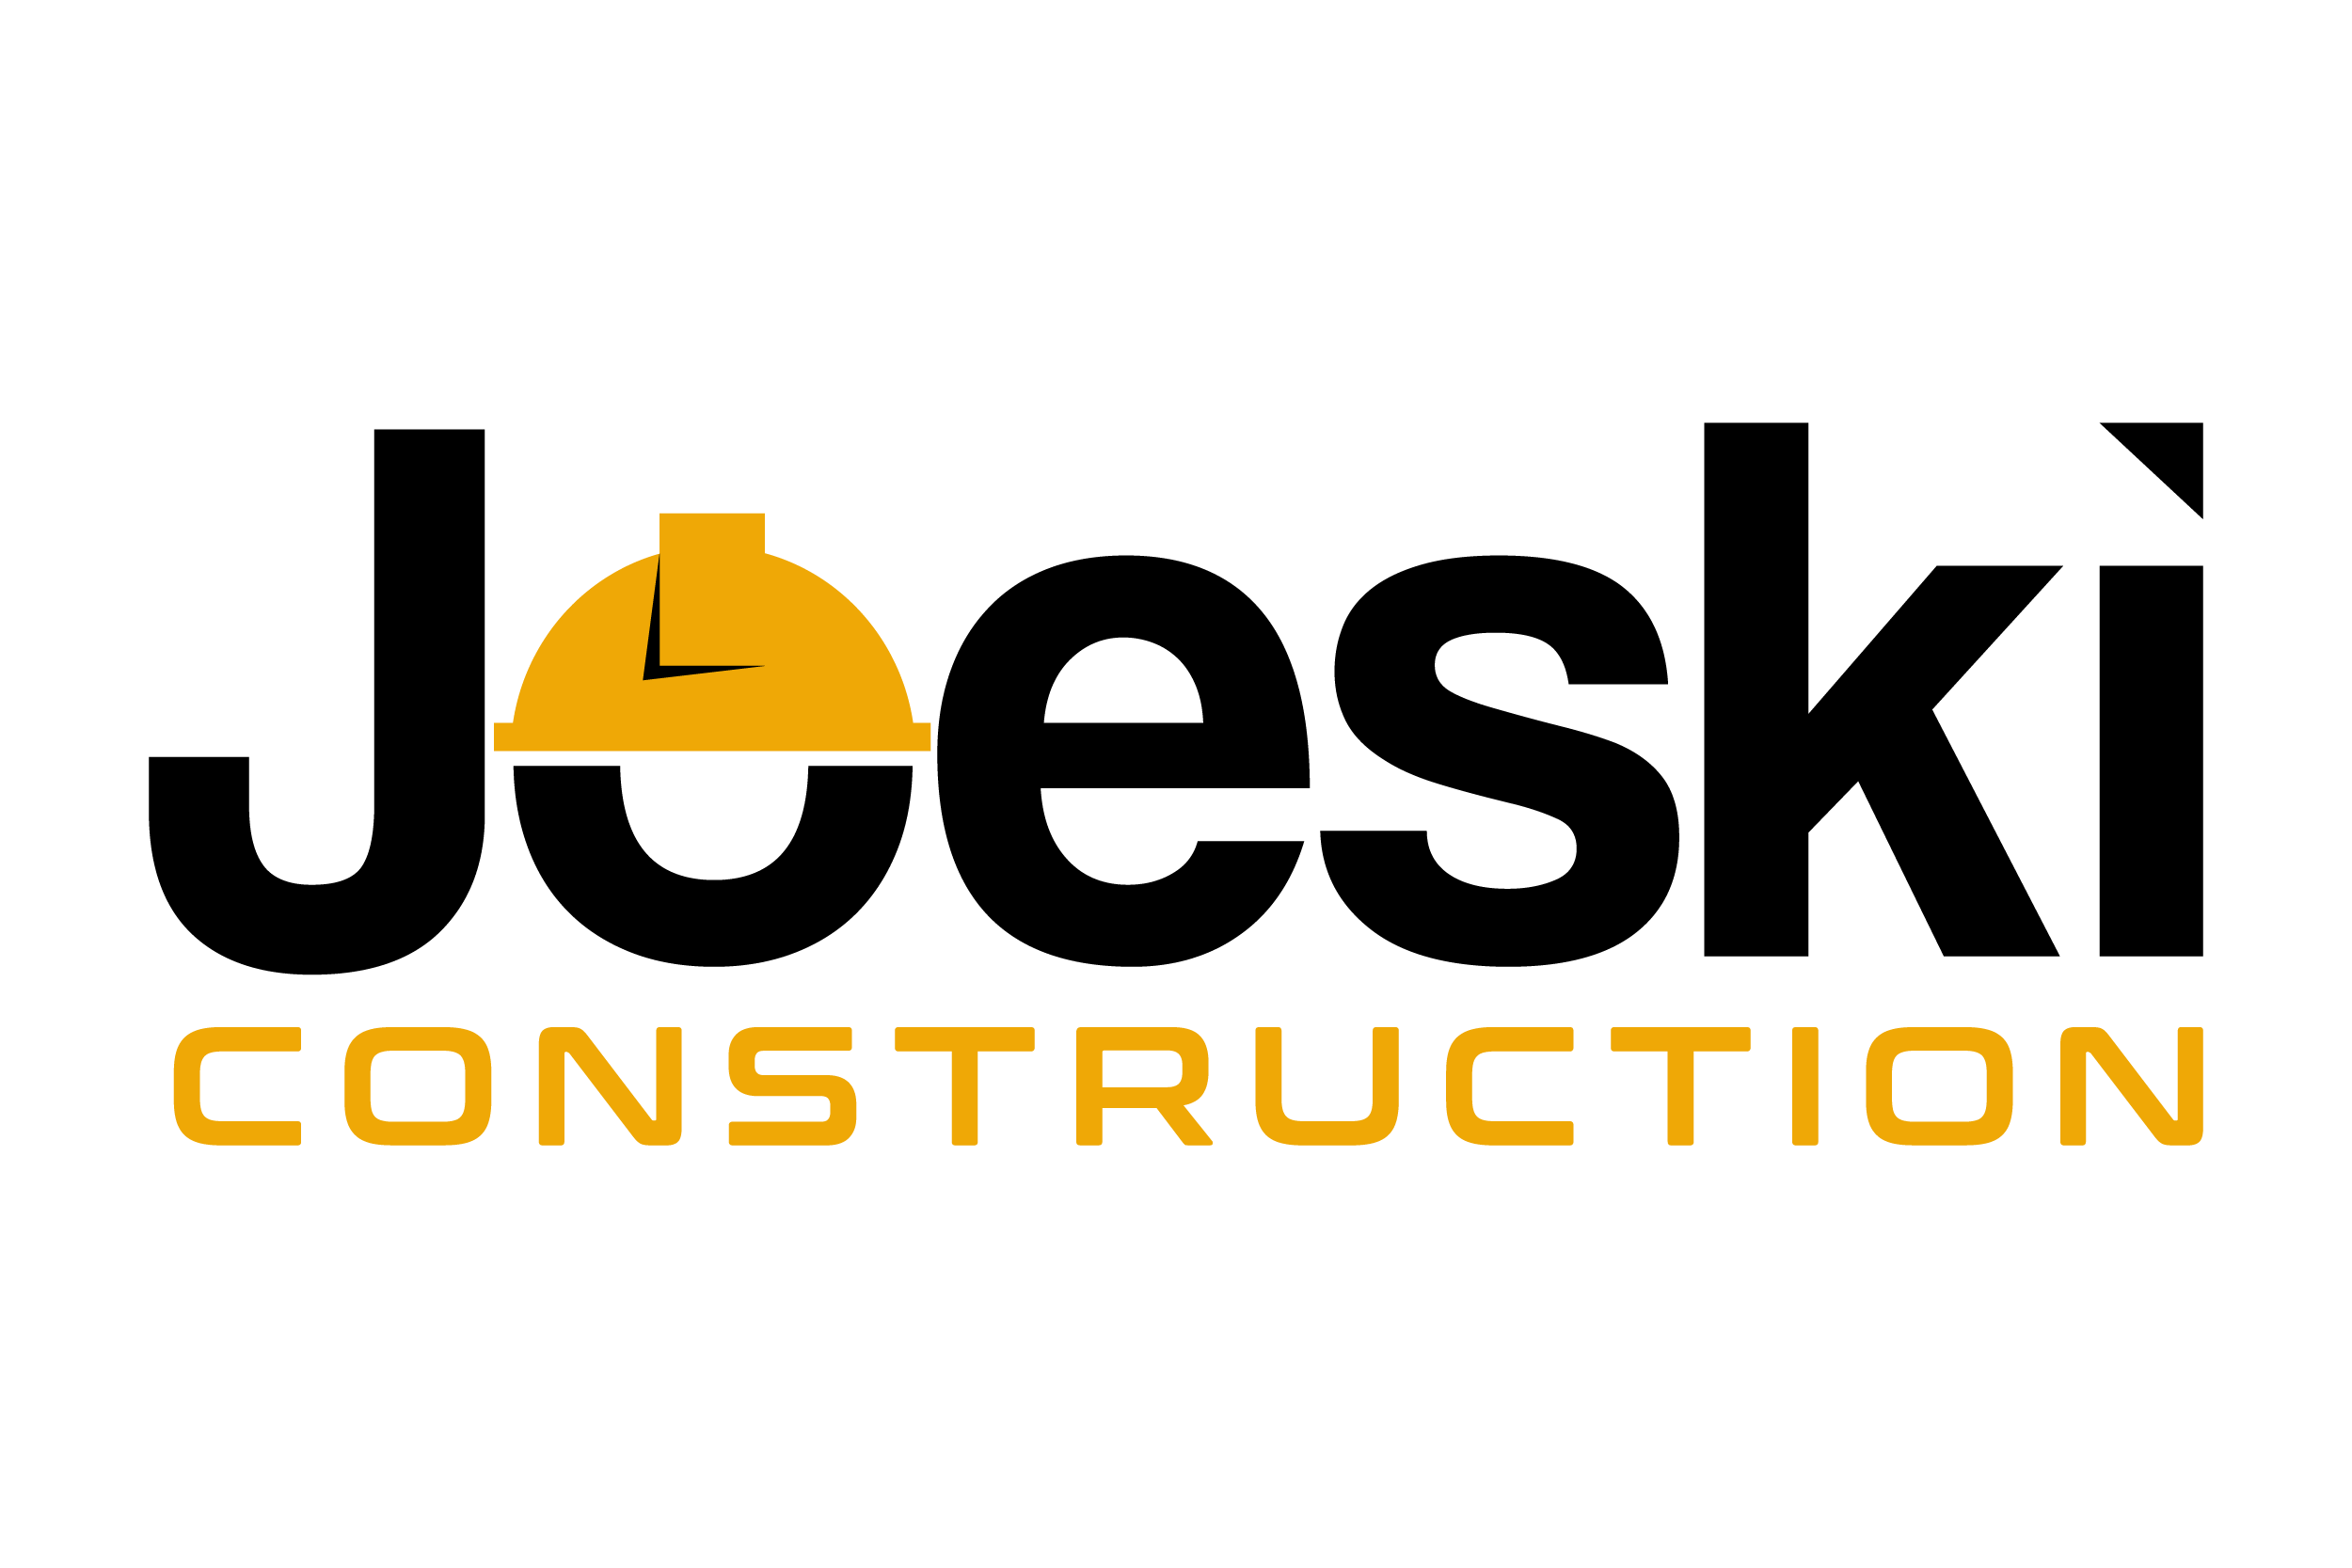 Joeski Construction